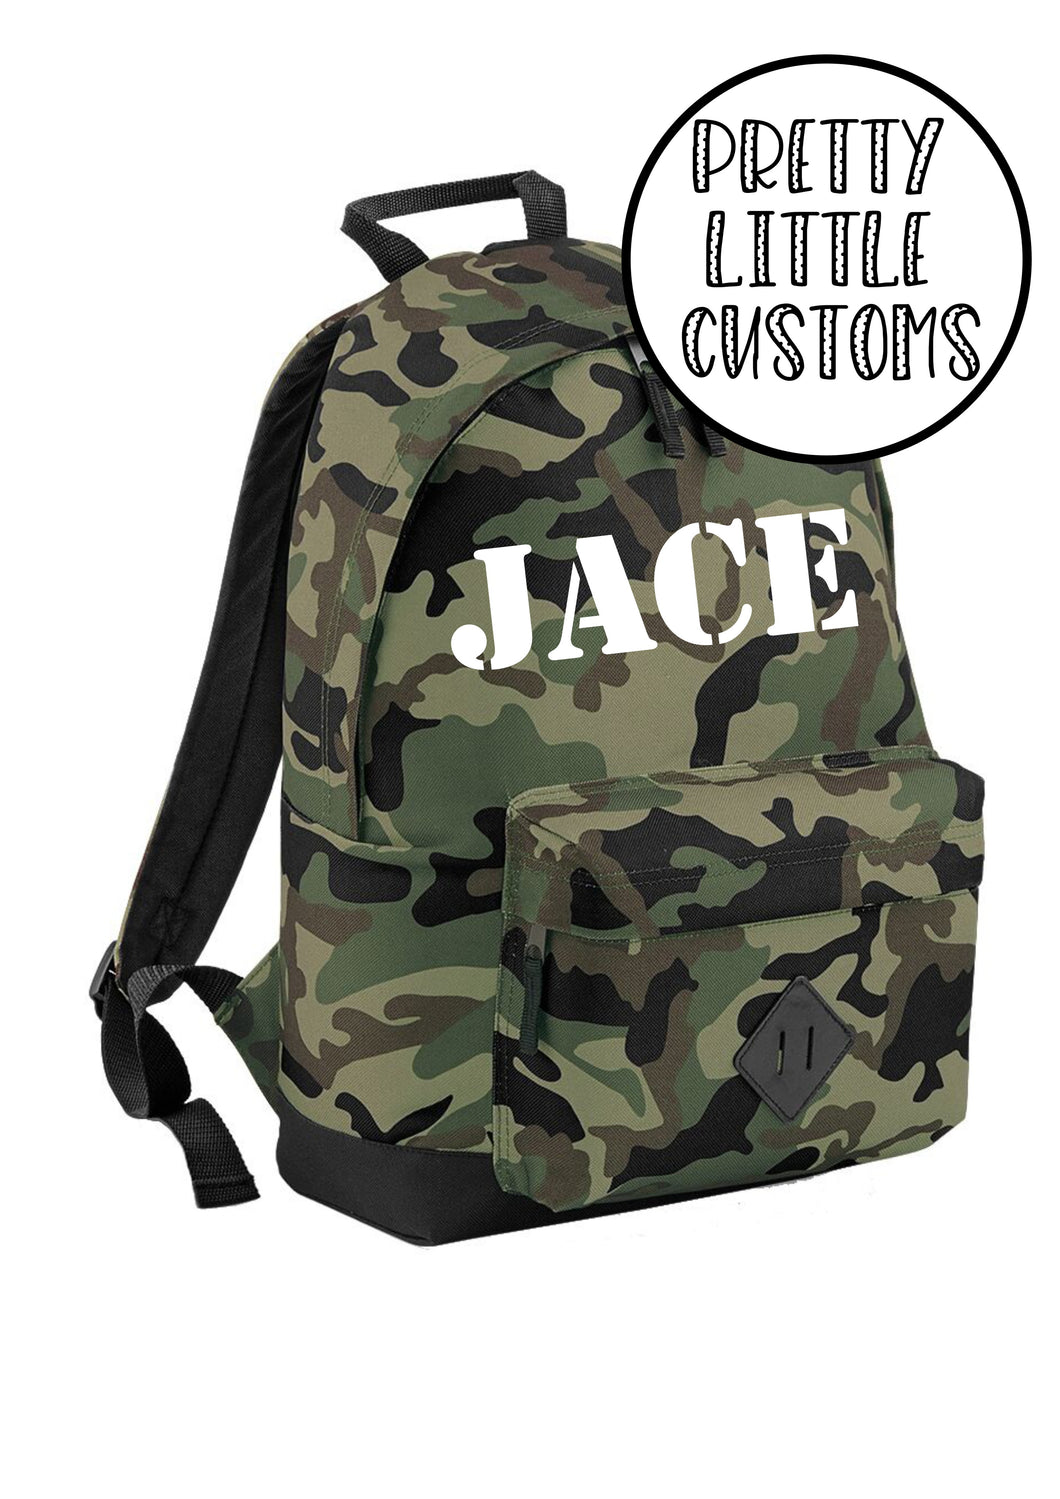 Personalised kids name rucksack/backpack/school bag - camo